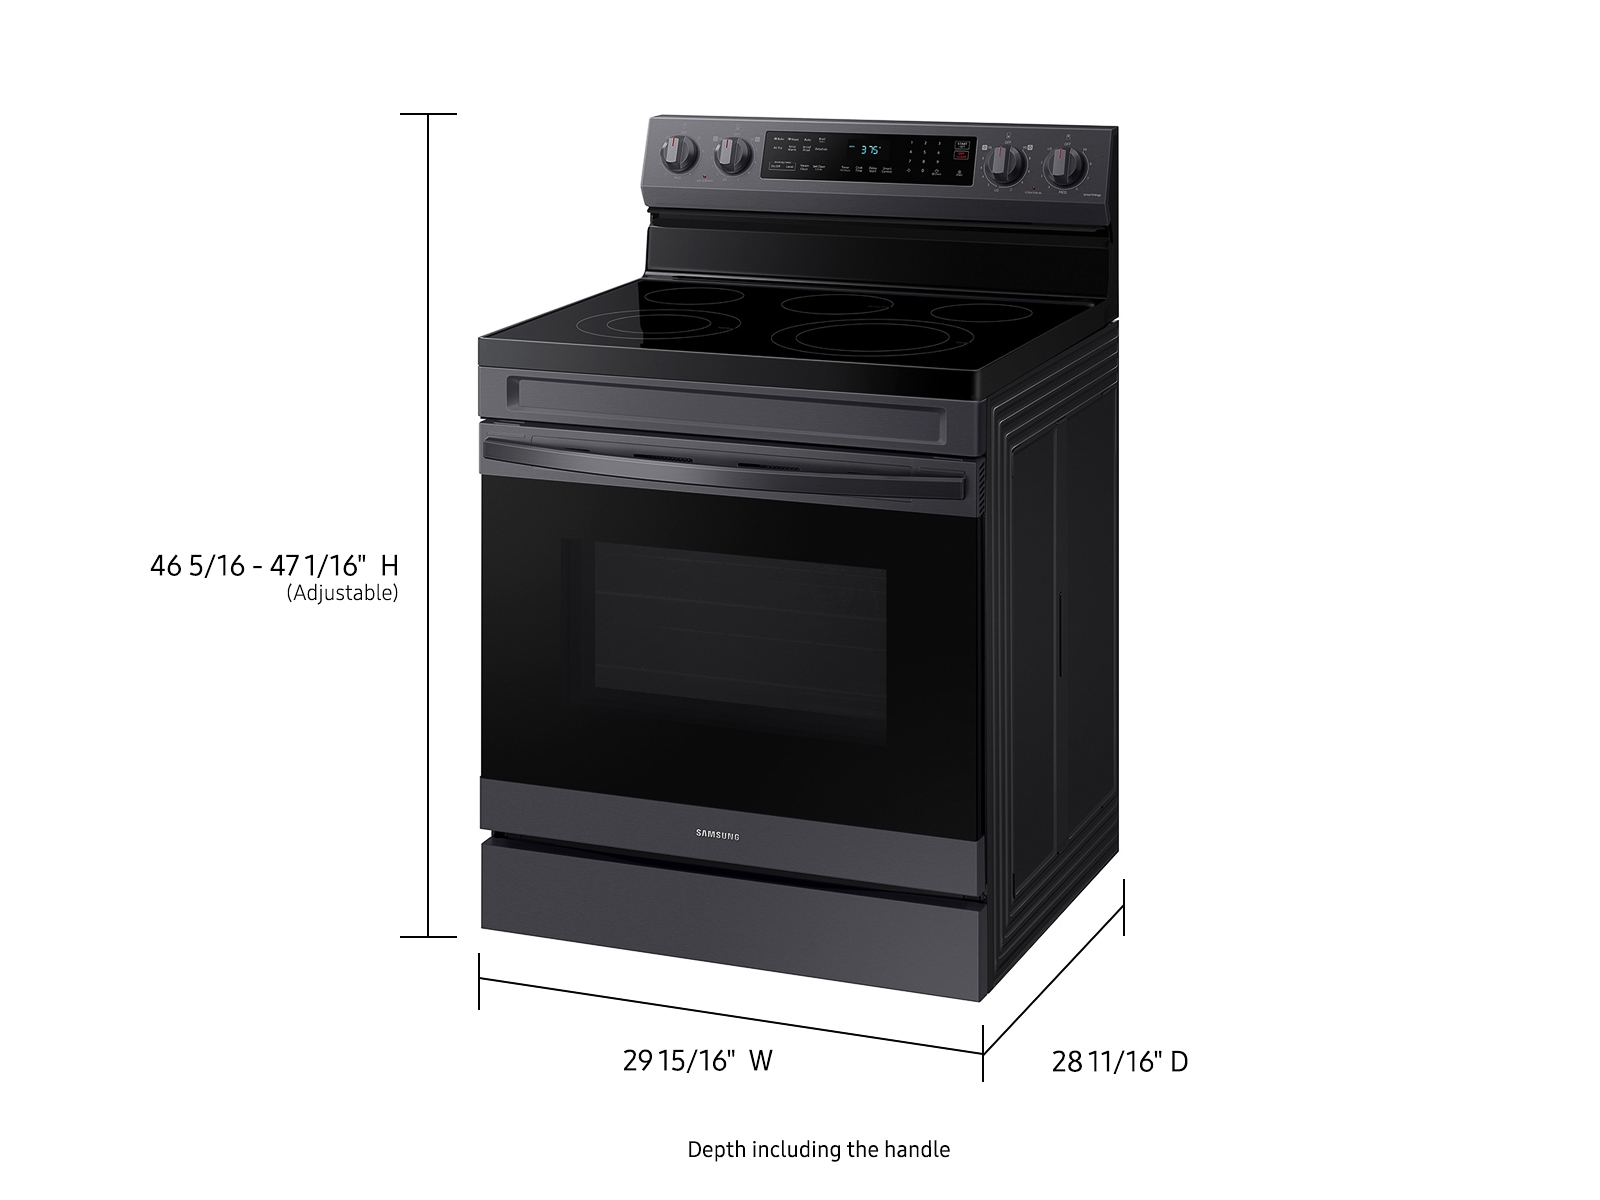 2021 GE Electric Stove Oven Range w/ Self Clean White - appliances